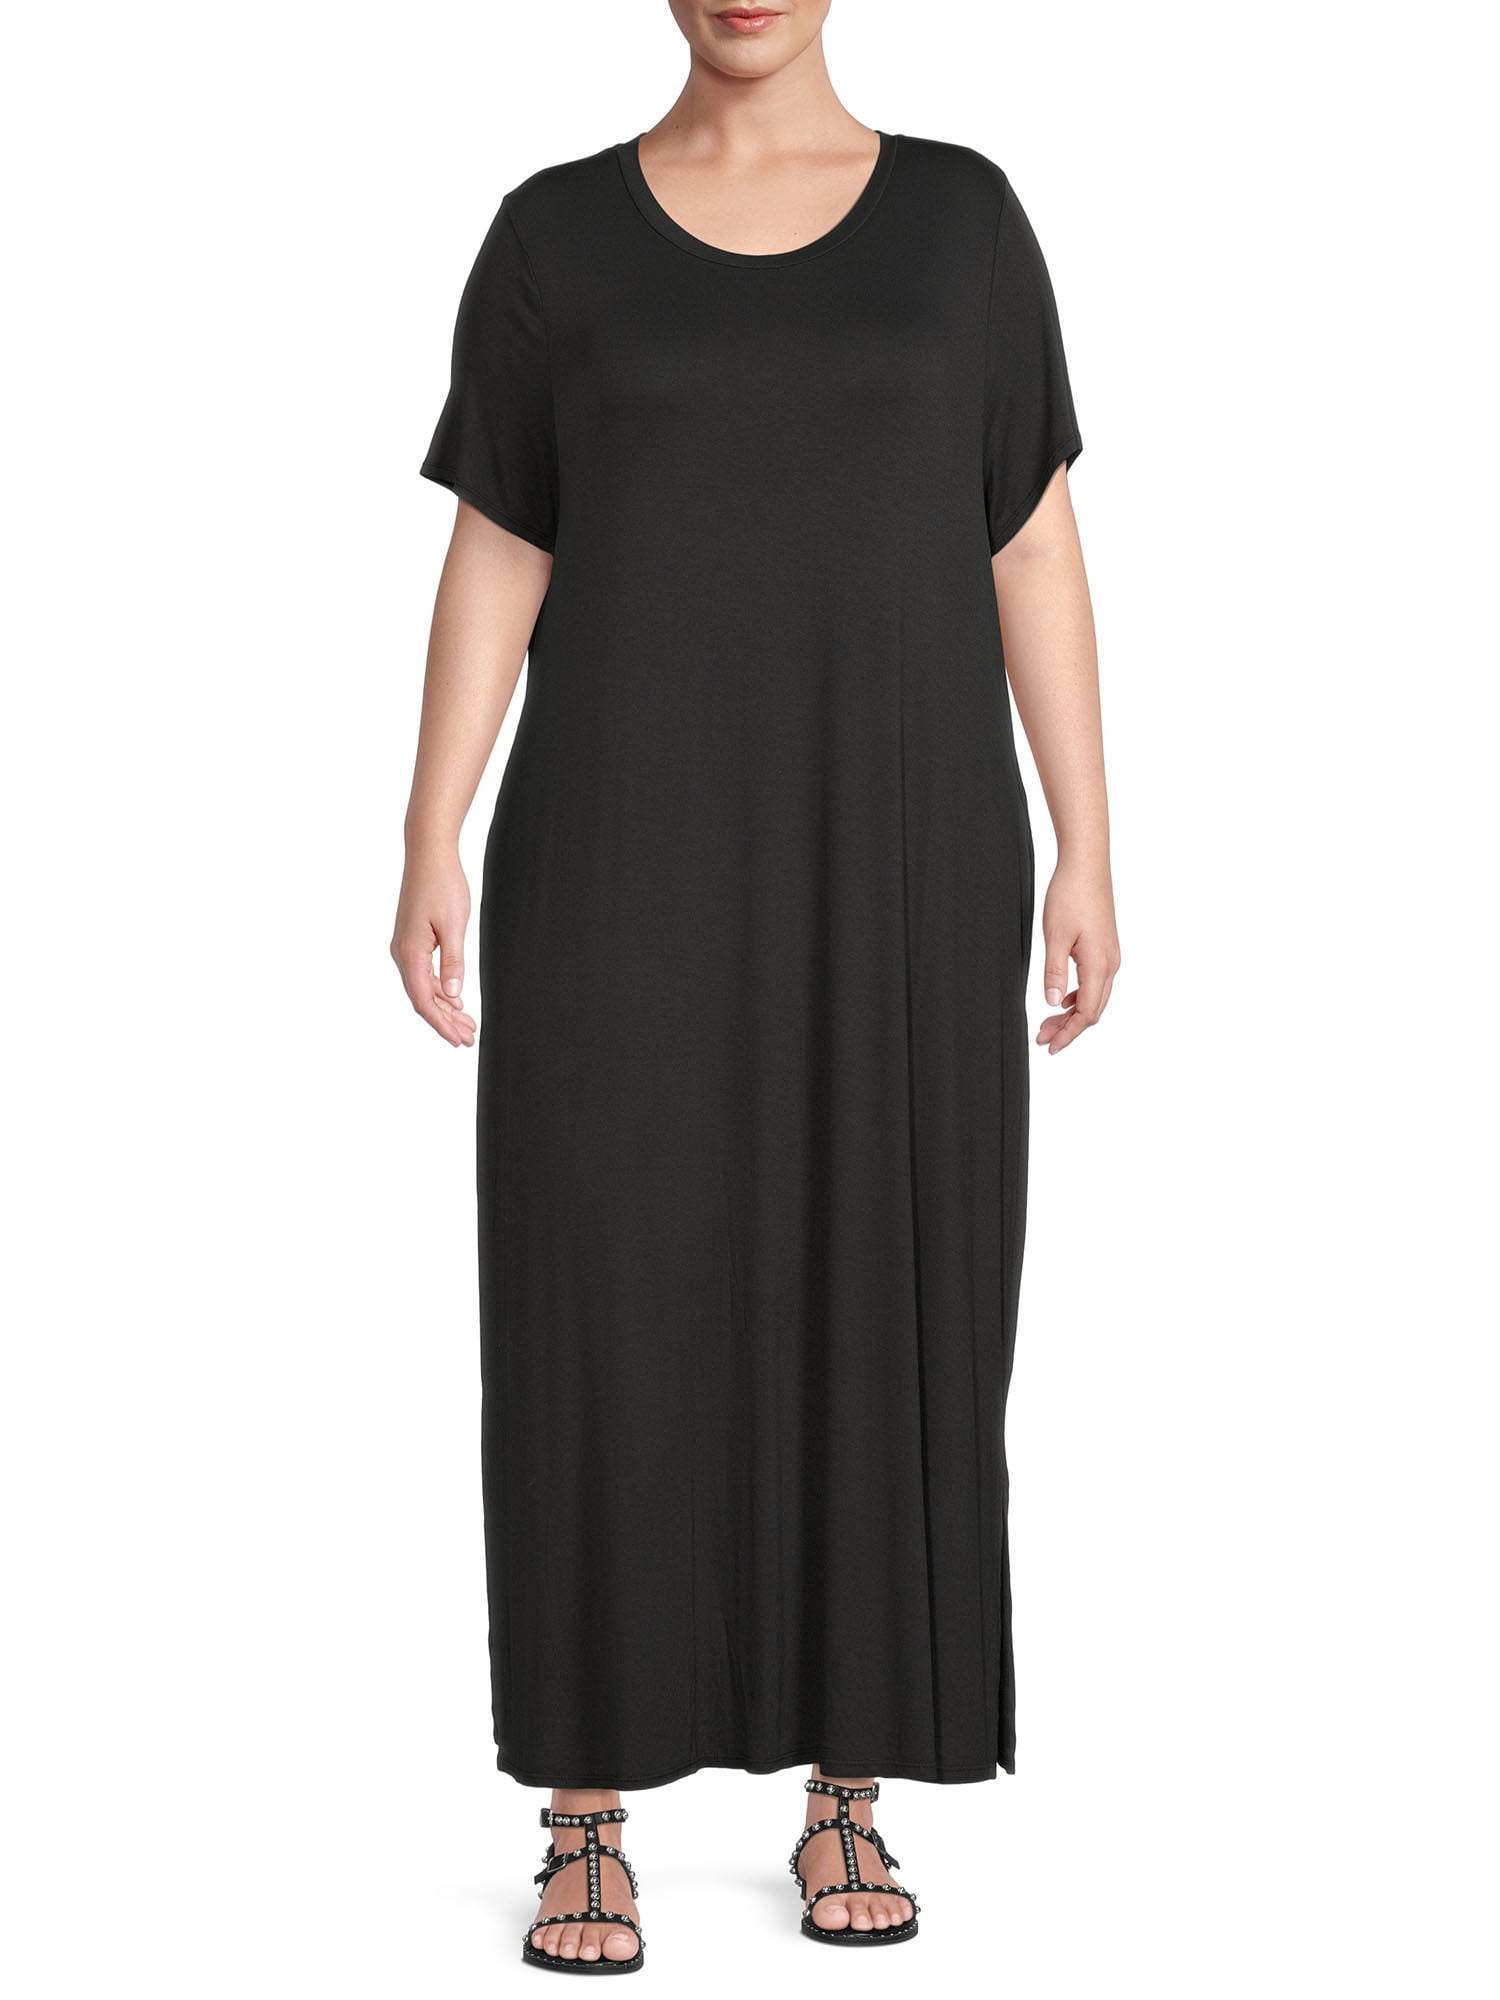 Terra & Sky Women's Plus Size Maxi Dress with Side Slits - Walmart.com